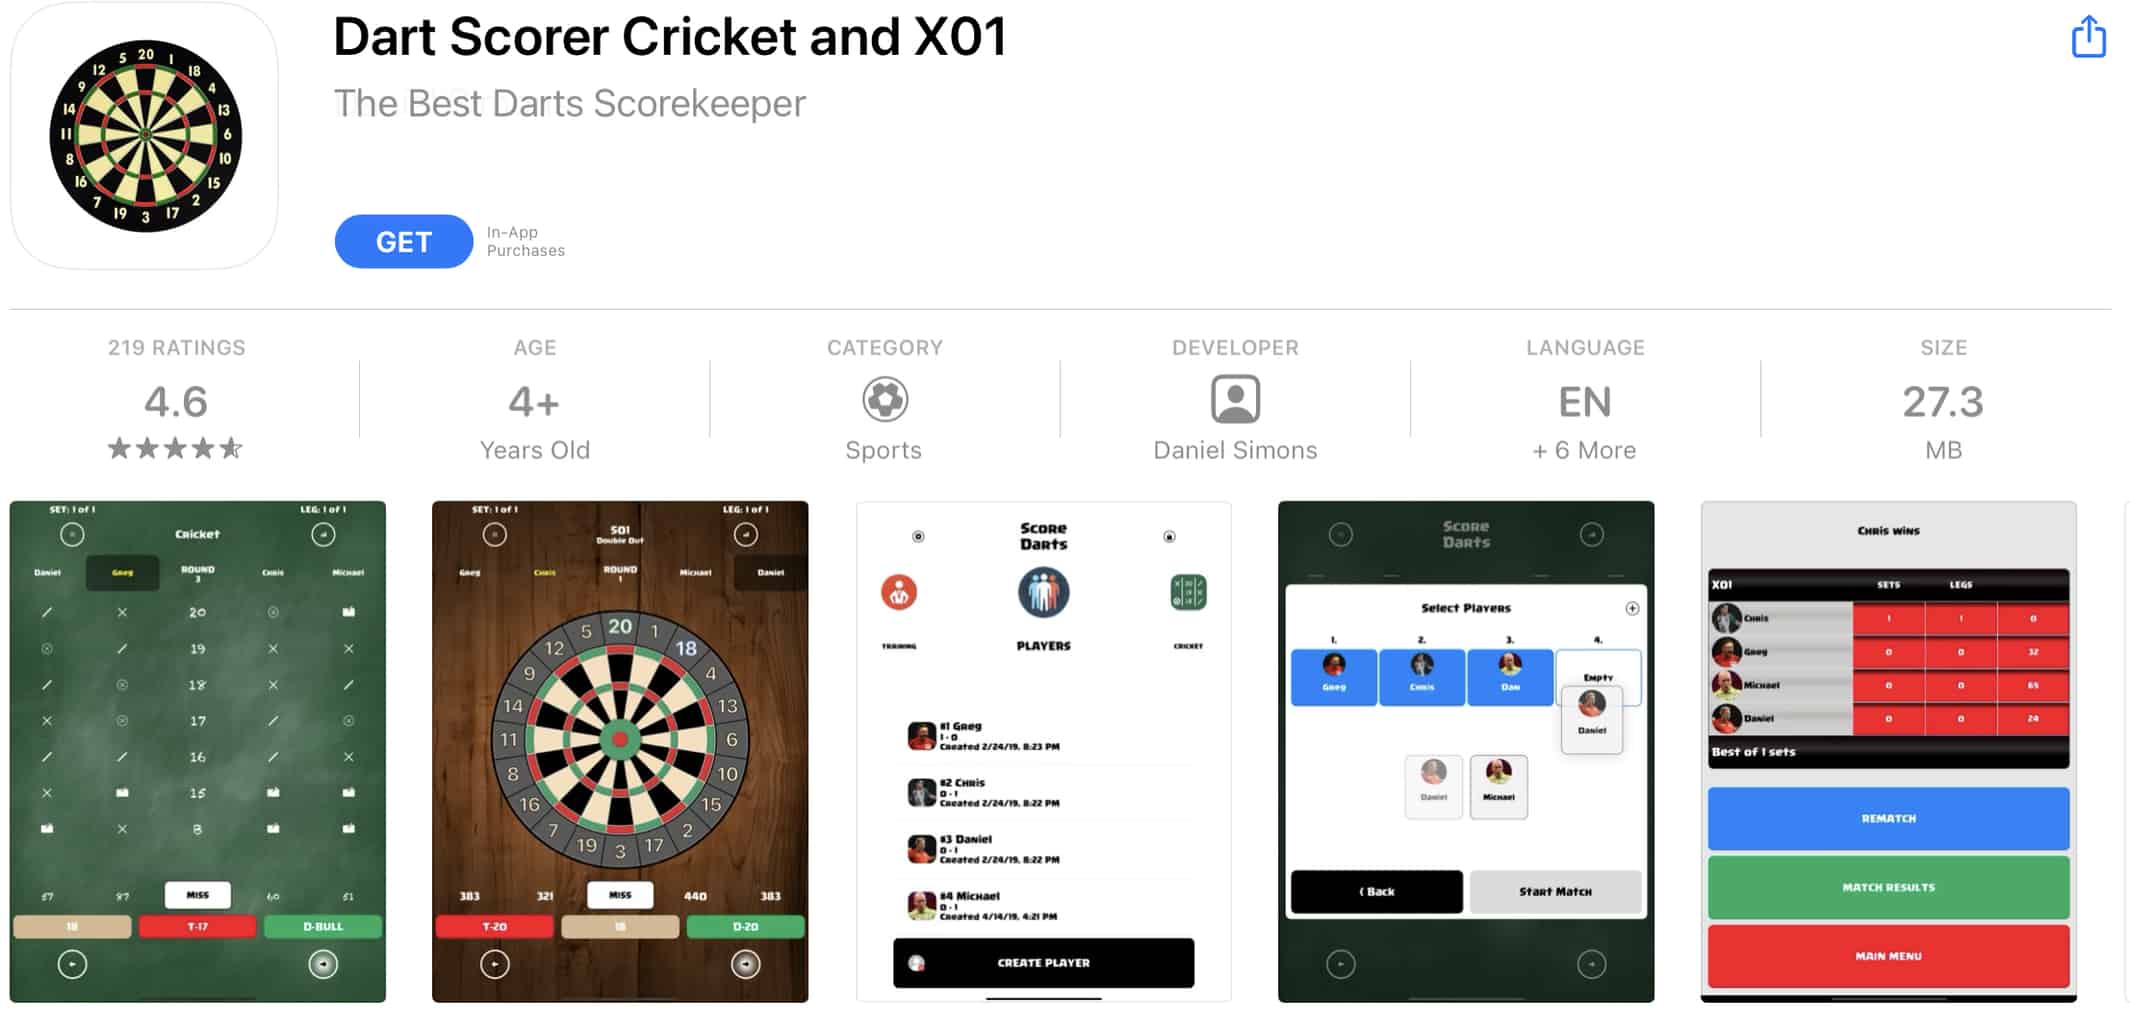 Dart Scorer Cricket and X01